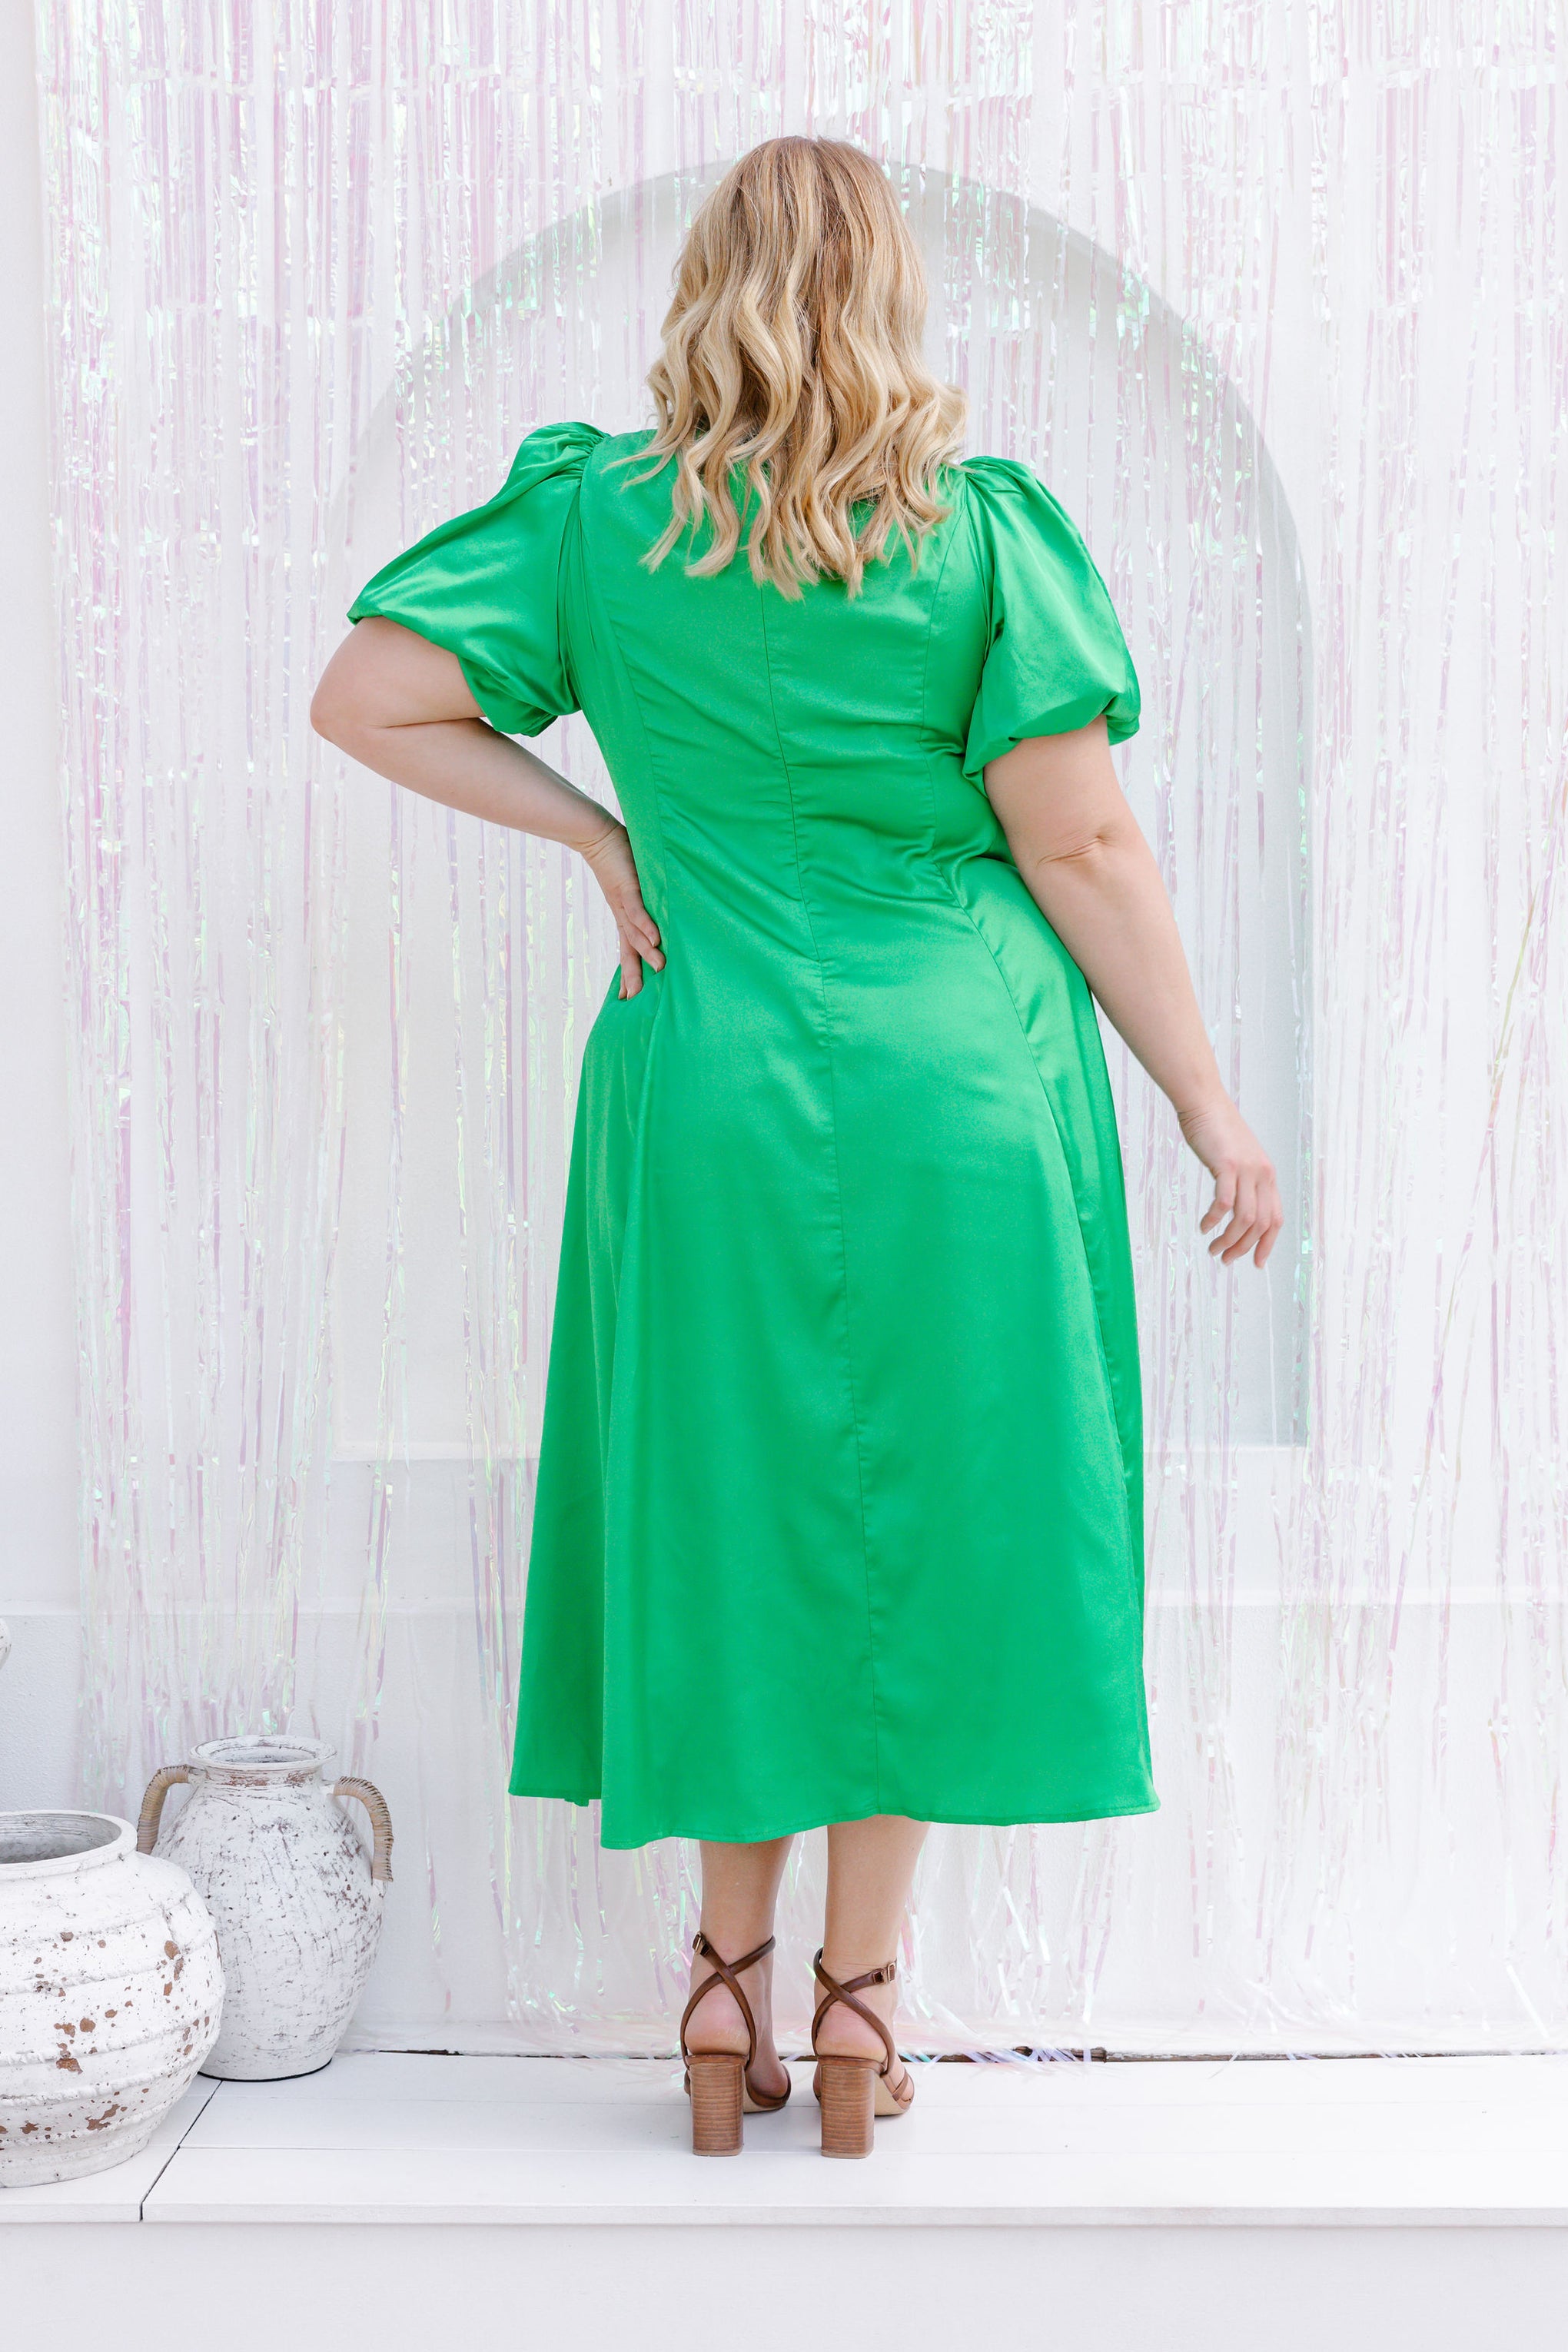 Venice Apple Green Satin Dress